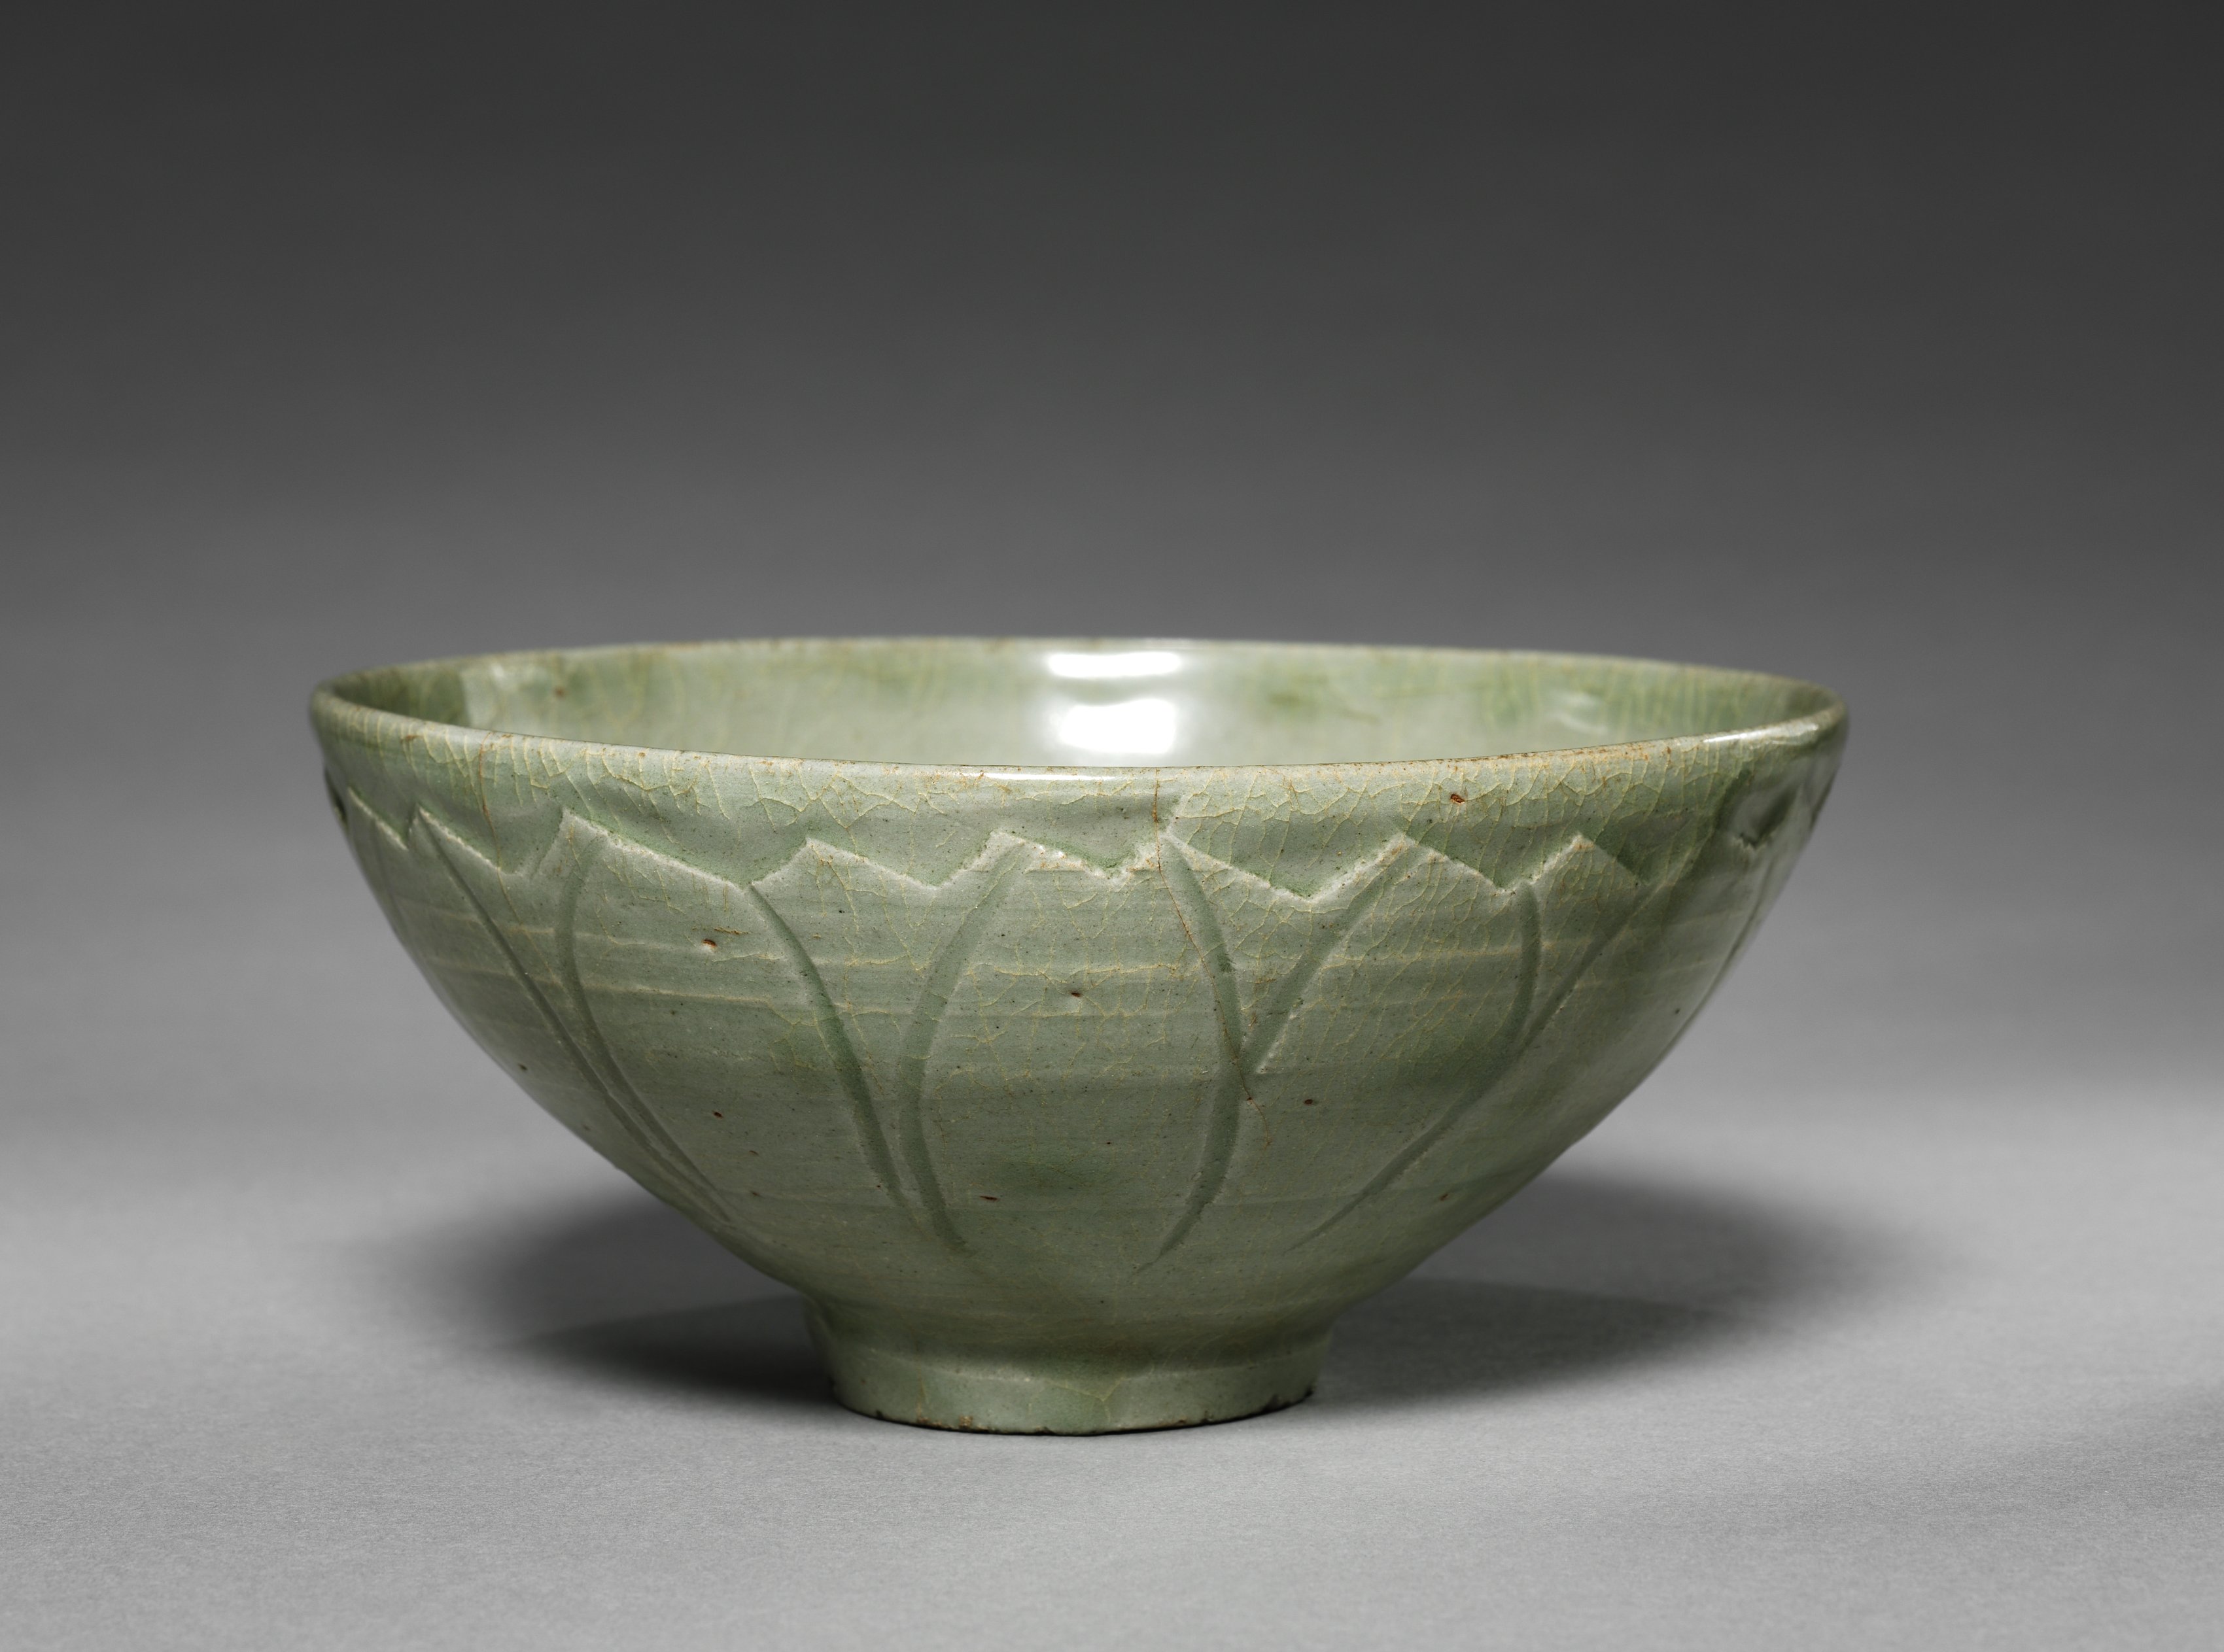 Bowl with Lotus Petal Design in Relief